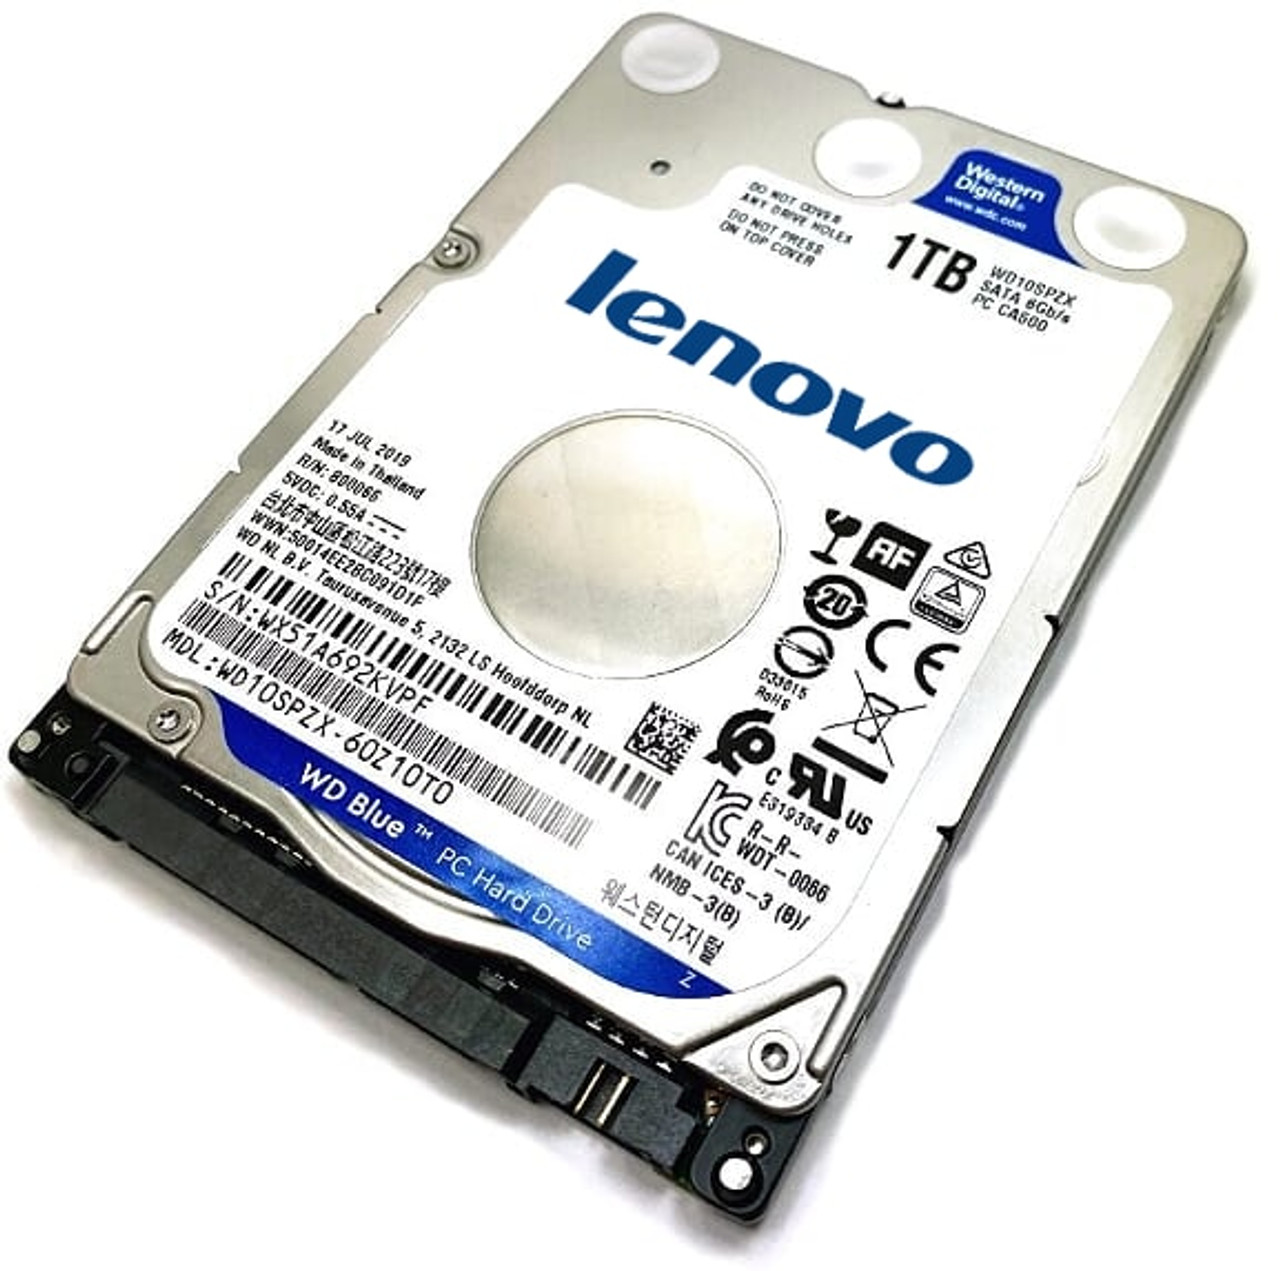 Lenovo Ideapad M50-80 80E5 Laptop Drive Replacement LaptopHDS.com